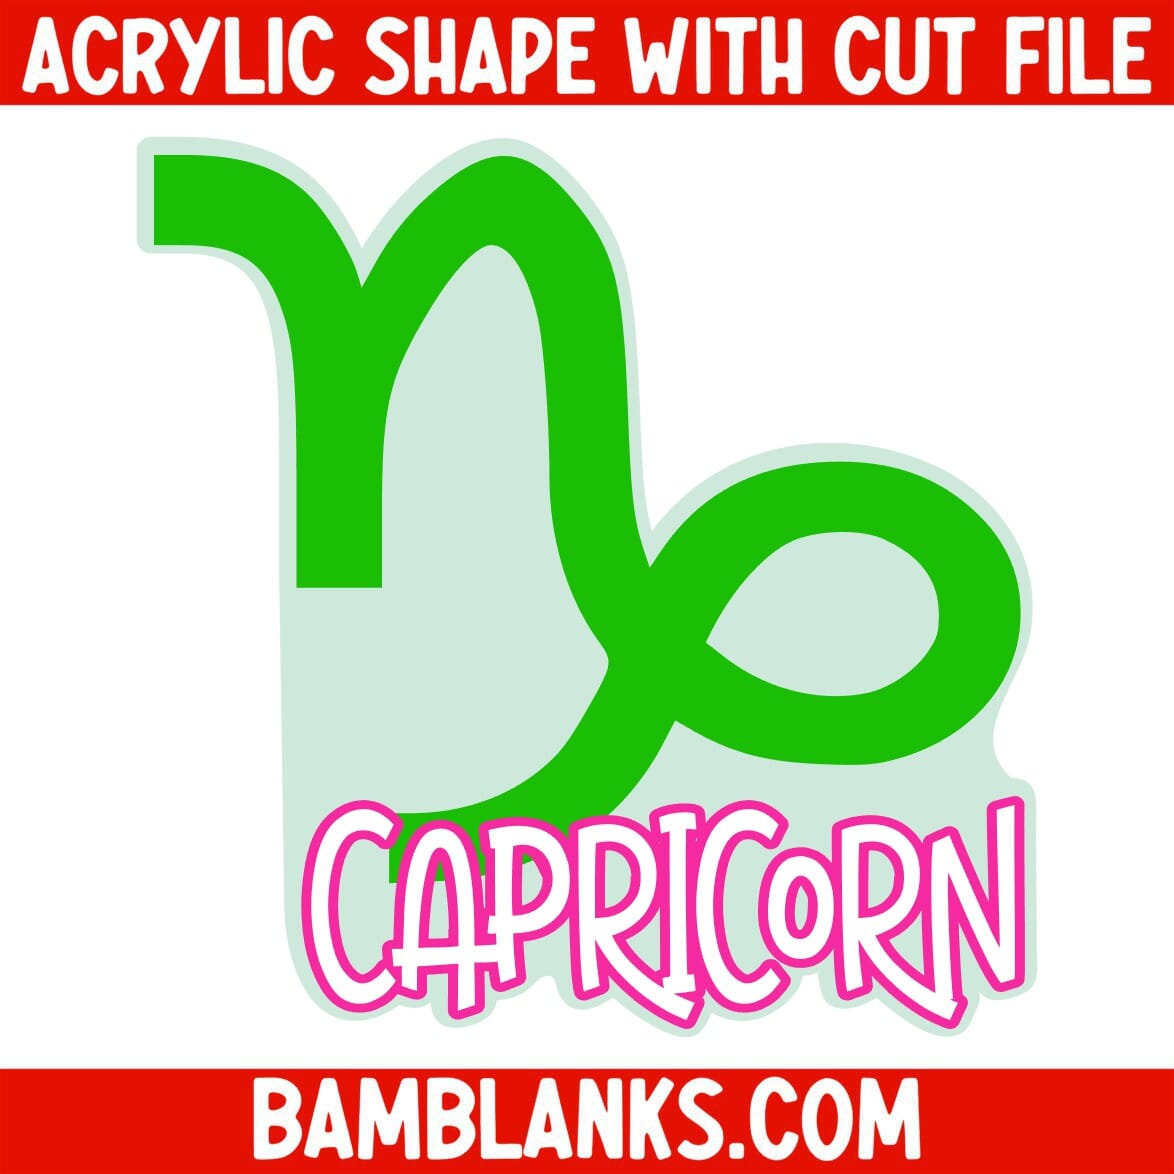 Capricorn - Acrylic Shape #1217